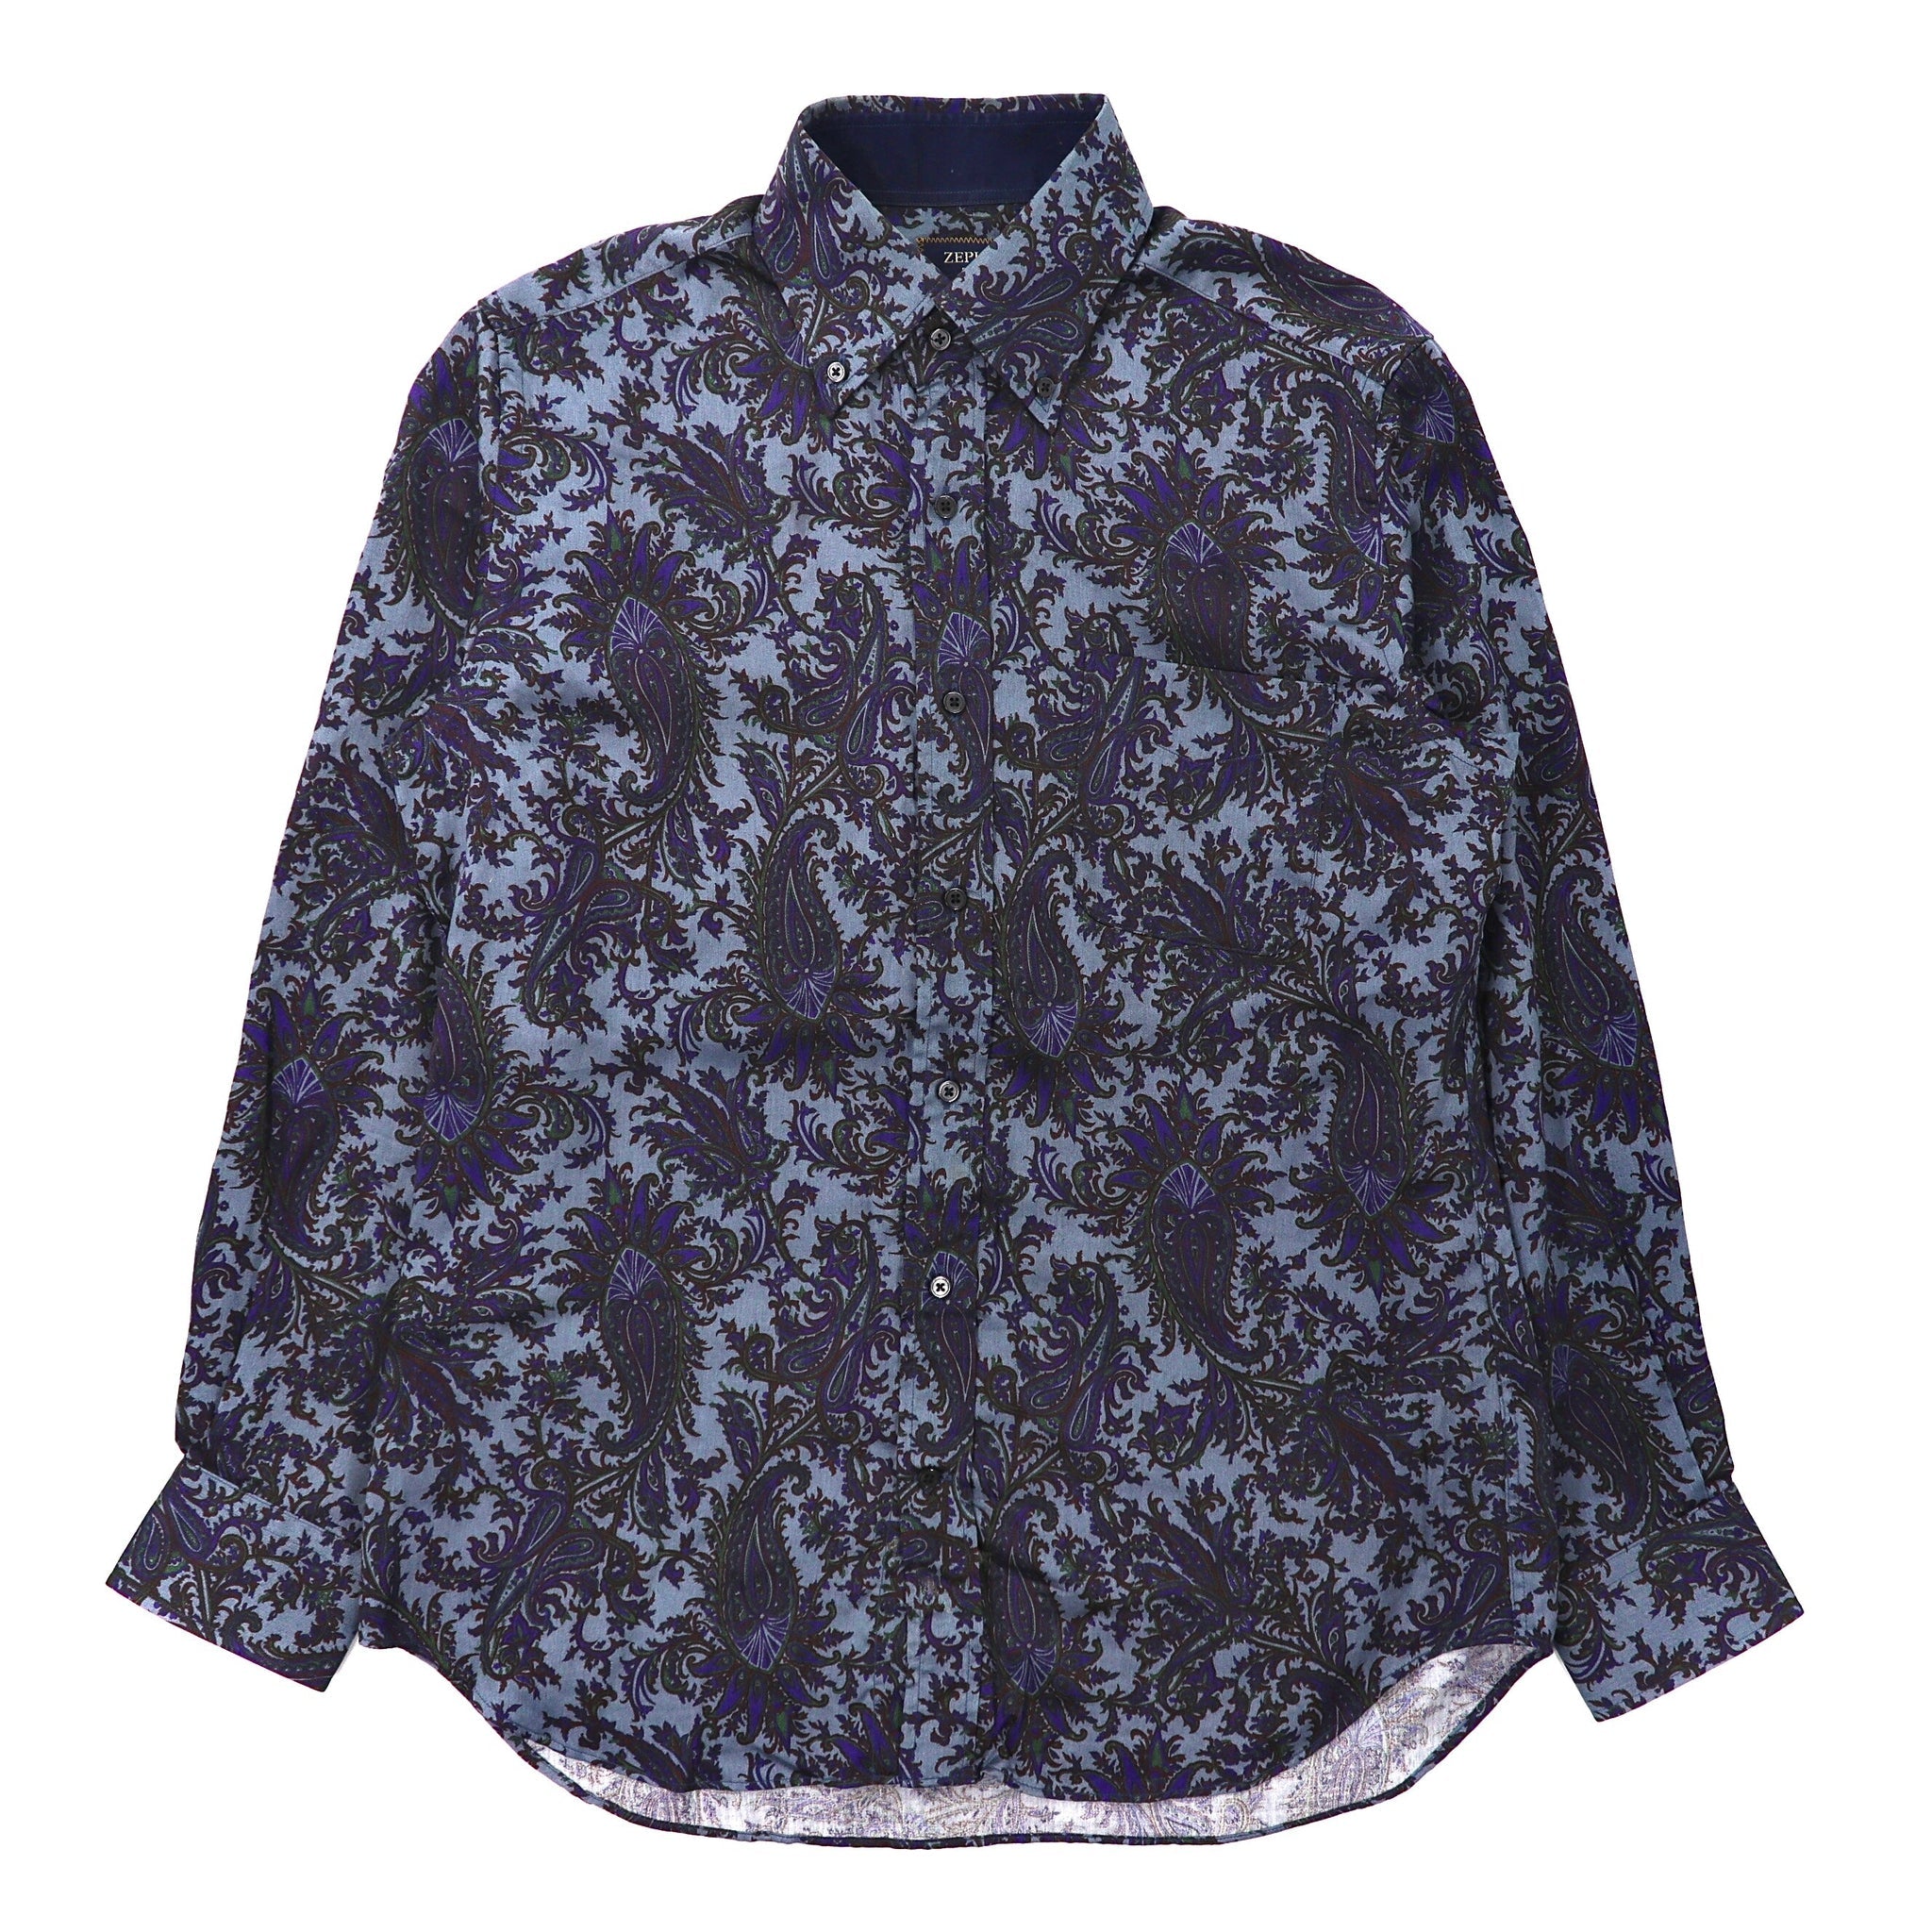 ZEPHYR ( D'URBAN ) ボタンダウンシャツ M ネイビー リヨセル 総柄 ペイズリー柄 日本製